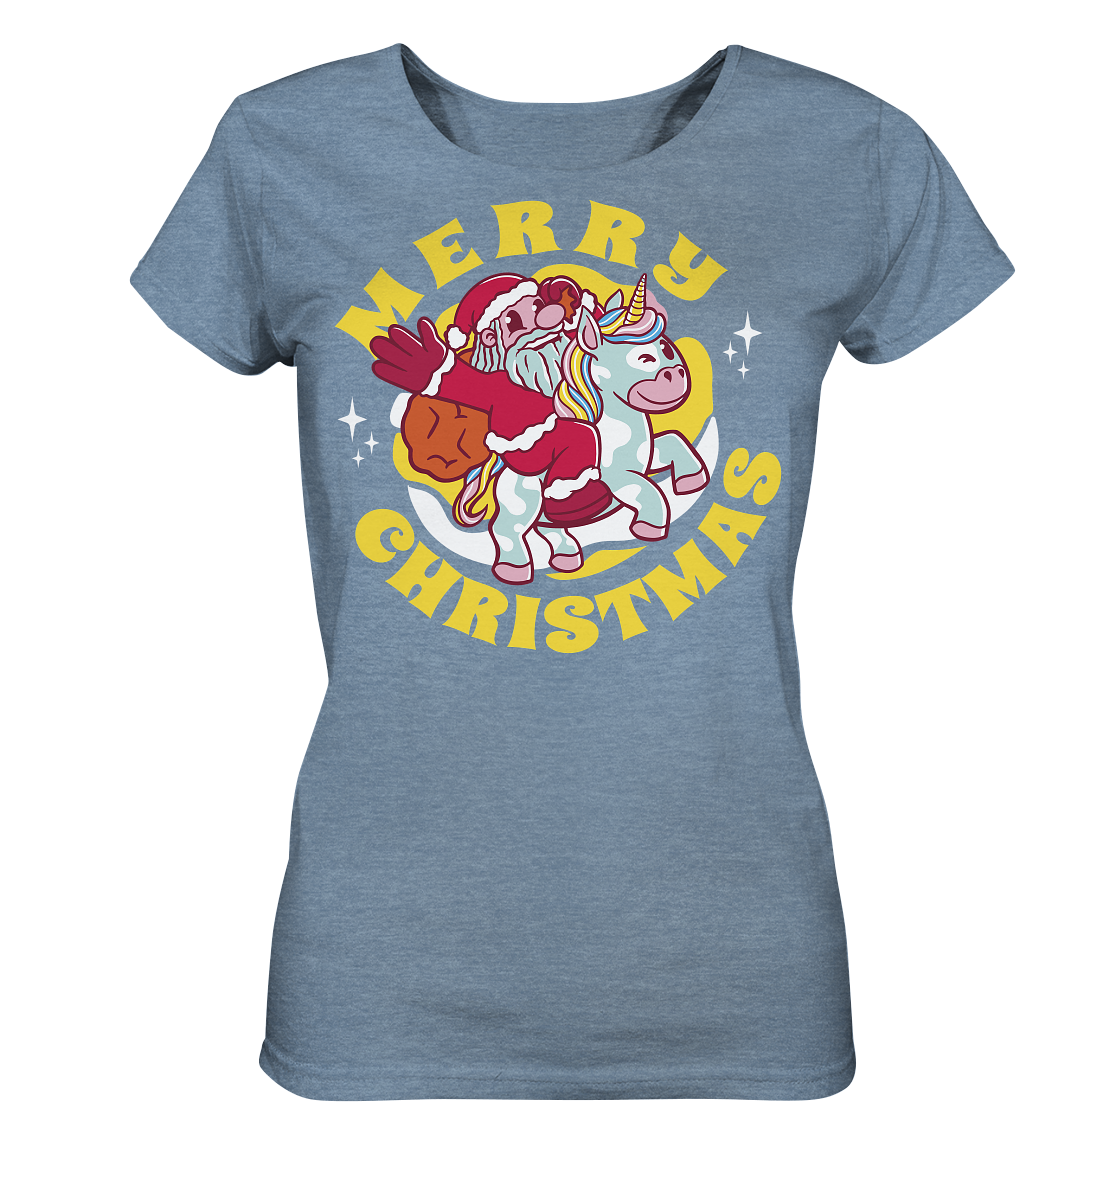 Reitender Nikolaus,Merry Christmas, Frohe Weihnachten  - Ladies Organic Shirt (meliert)